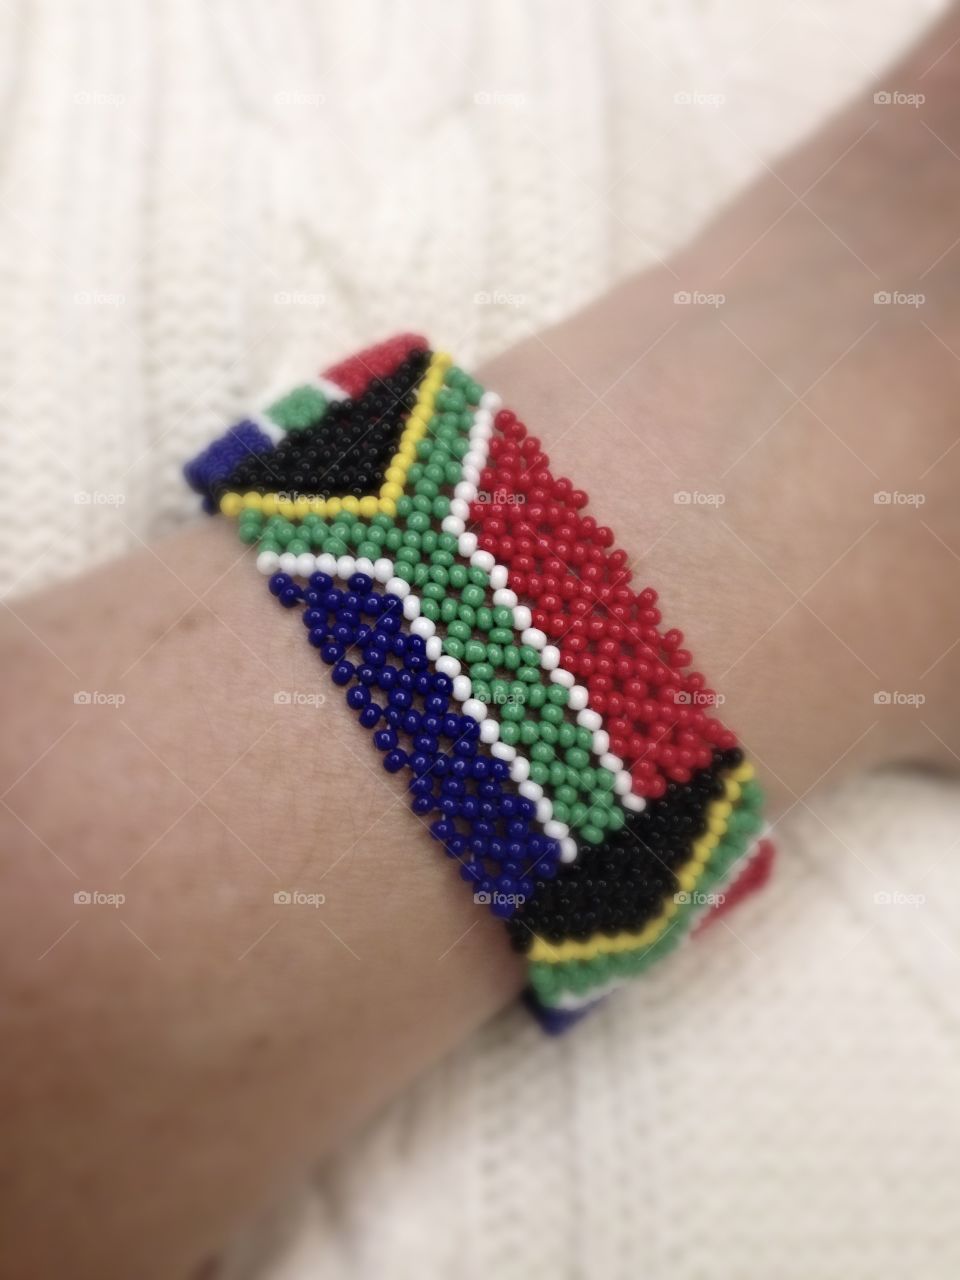 Handmade by a South African grannie "Gogo".